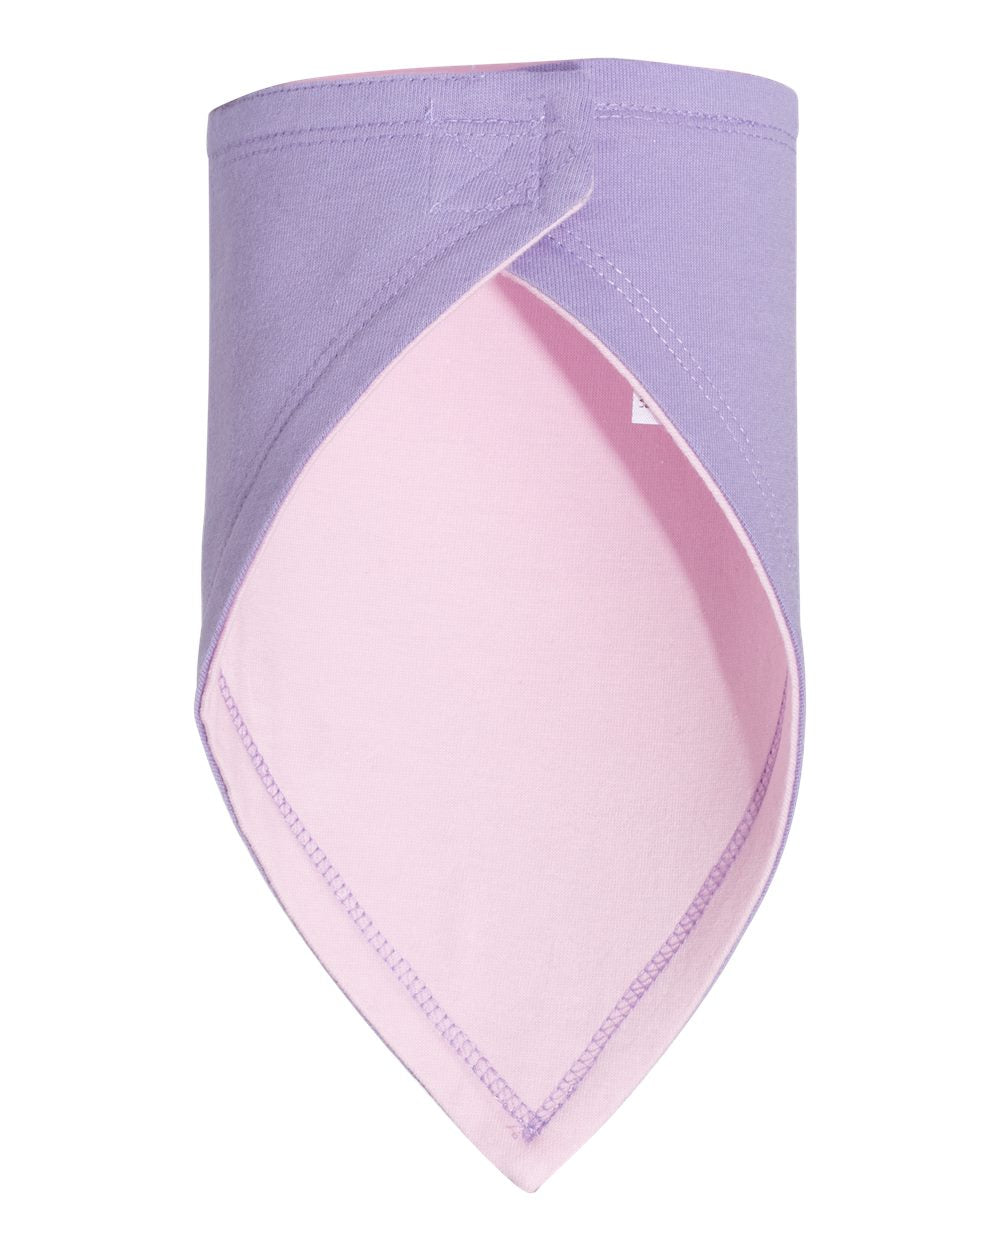 rabbit skins infant premium jersey bandana bib lavender pink